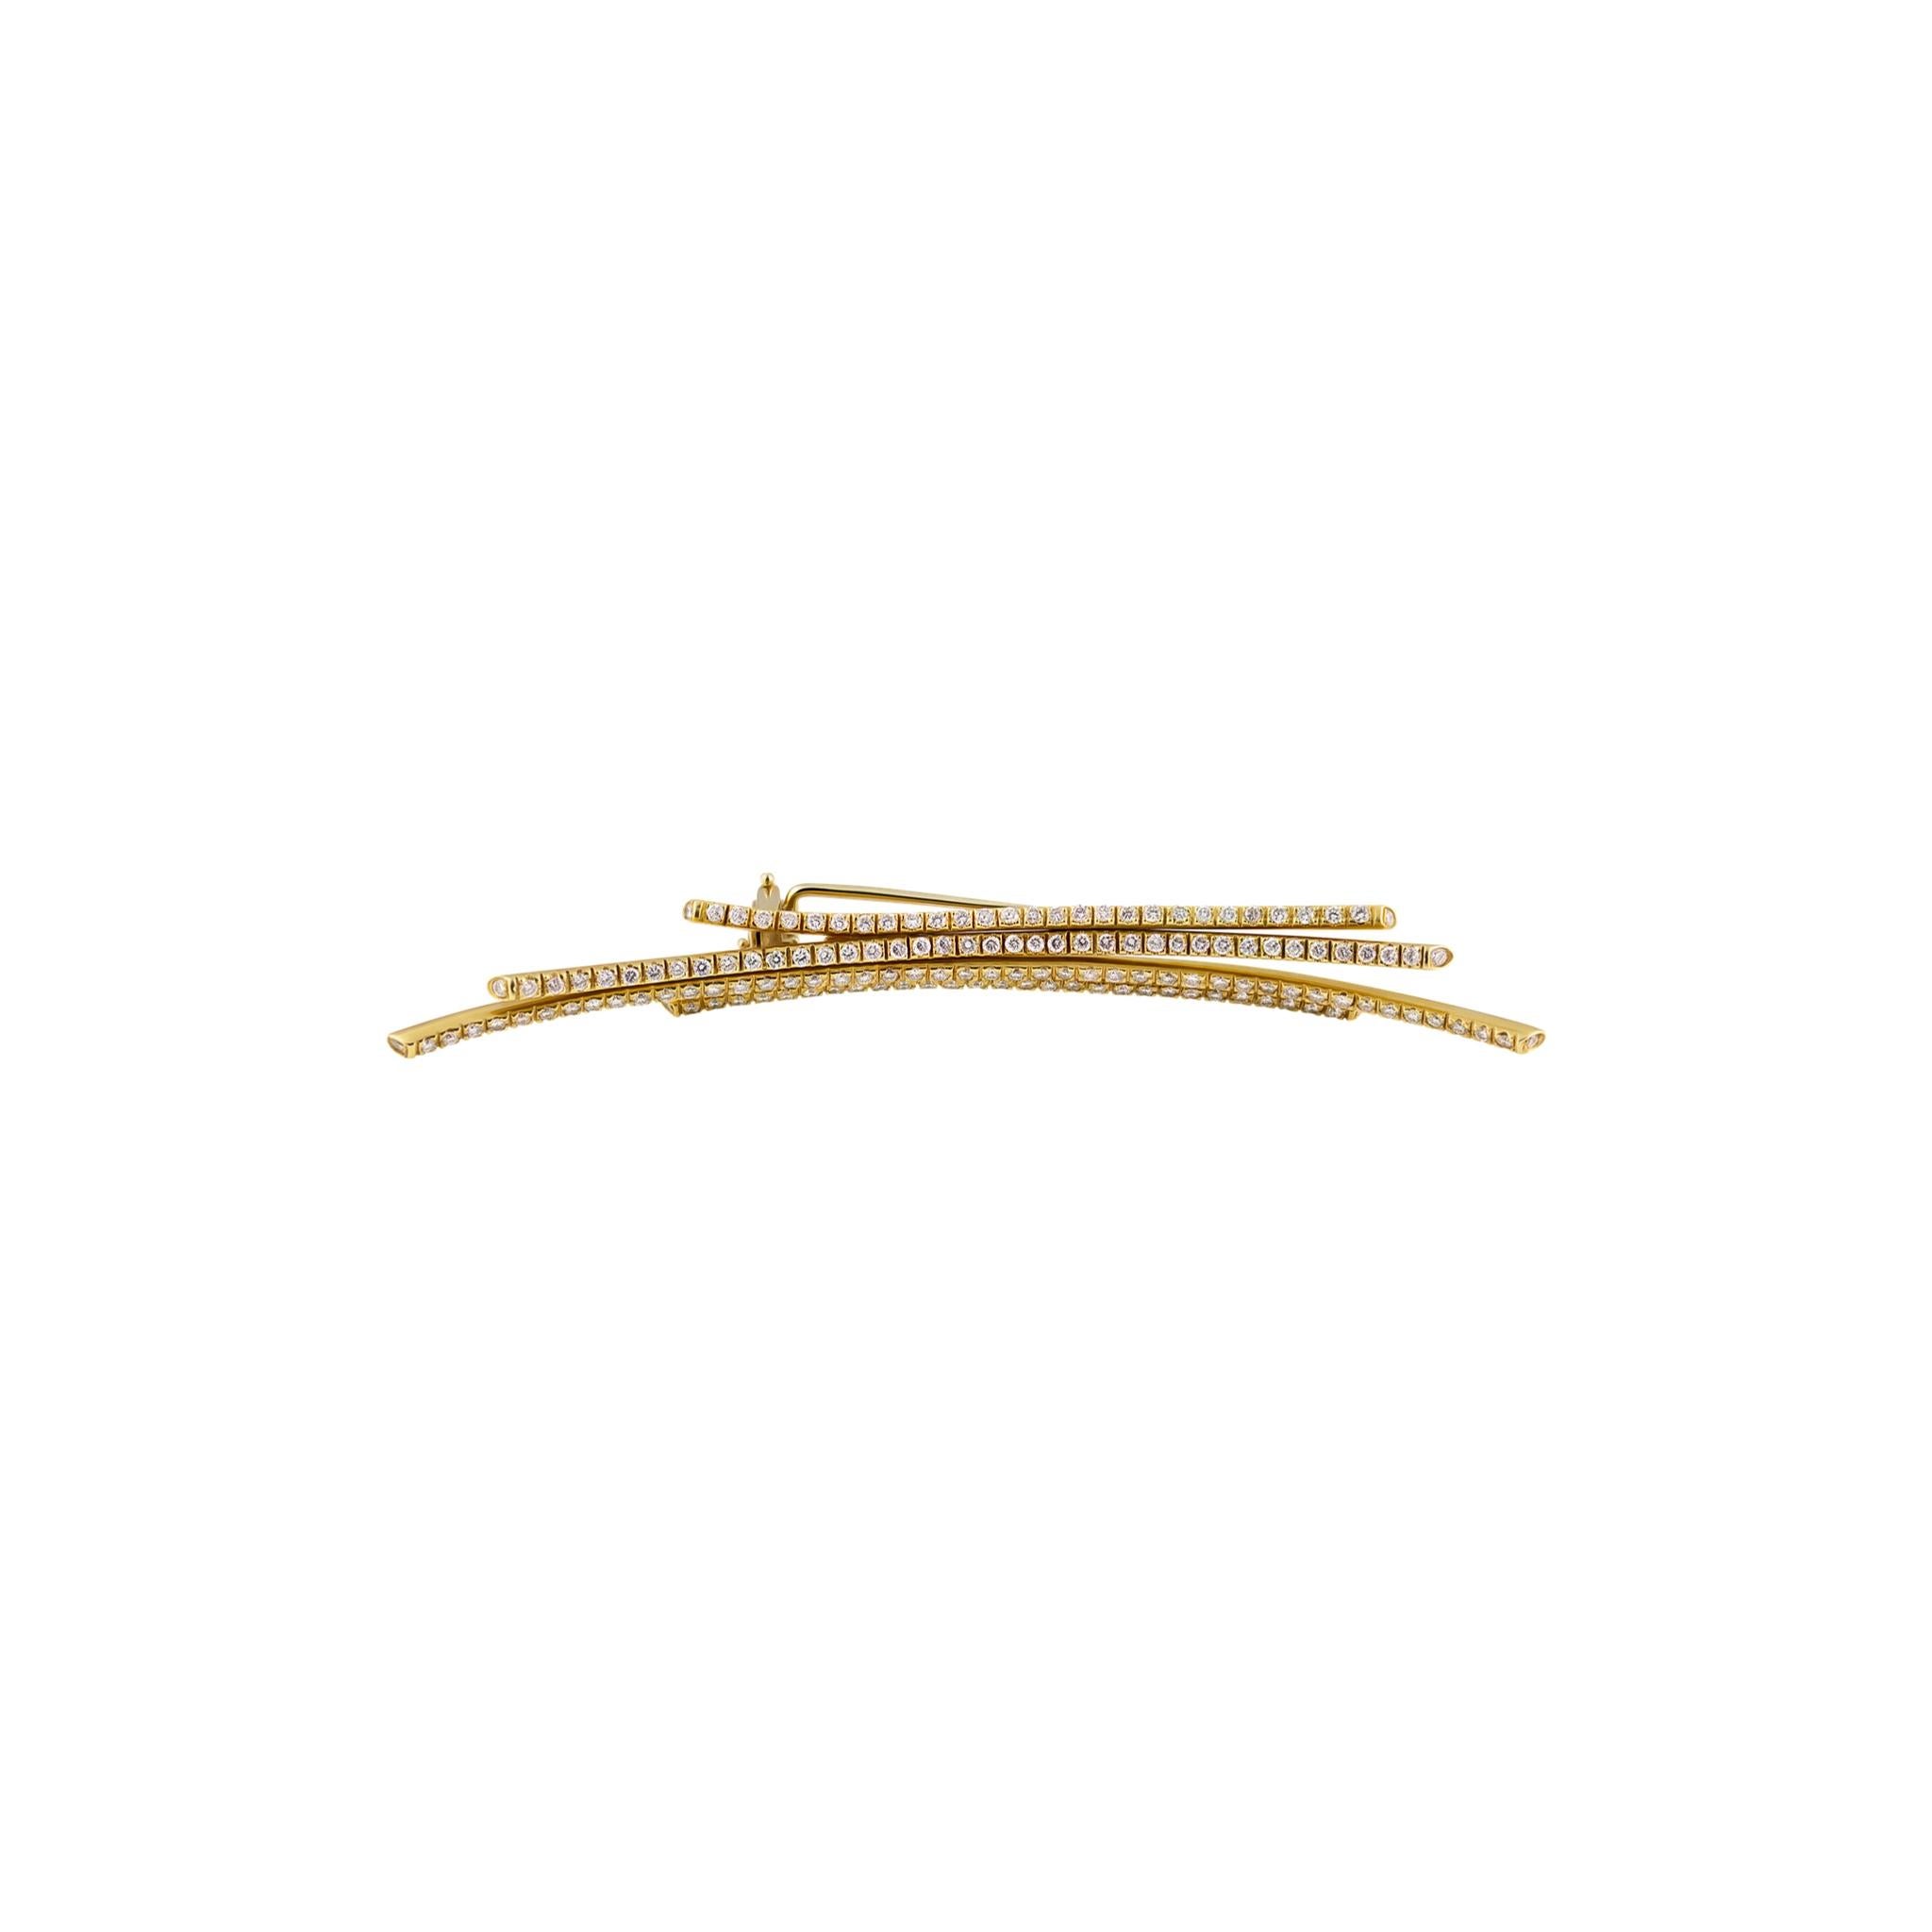 Stefan Hafner Pin
18K Yellow Gold
Diamond: 1.48ctw
Italian made
Retail price: $12,150.00
SKU: BLU01459